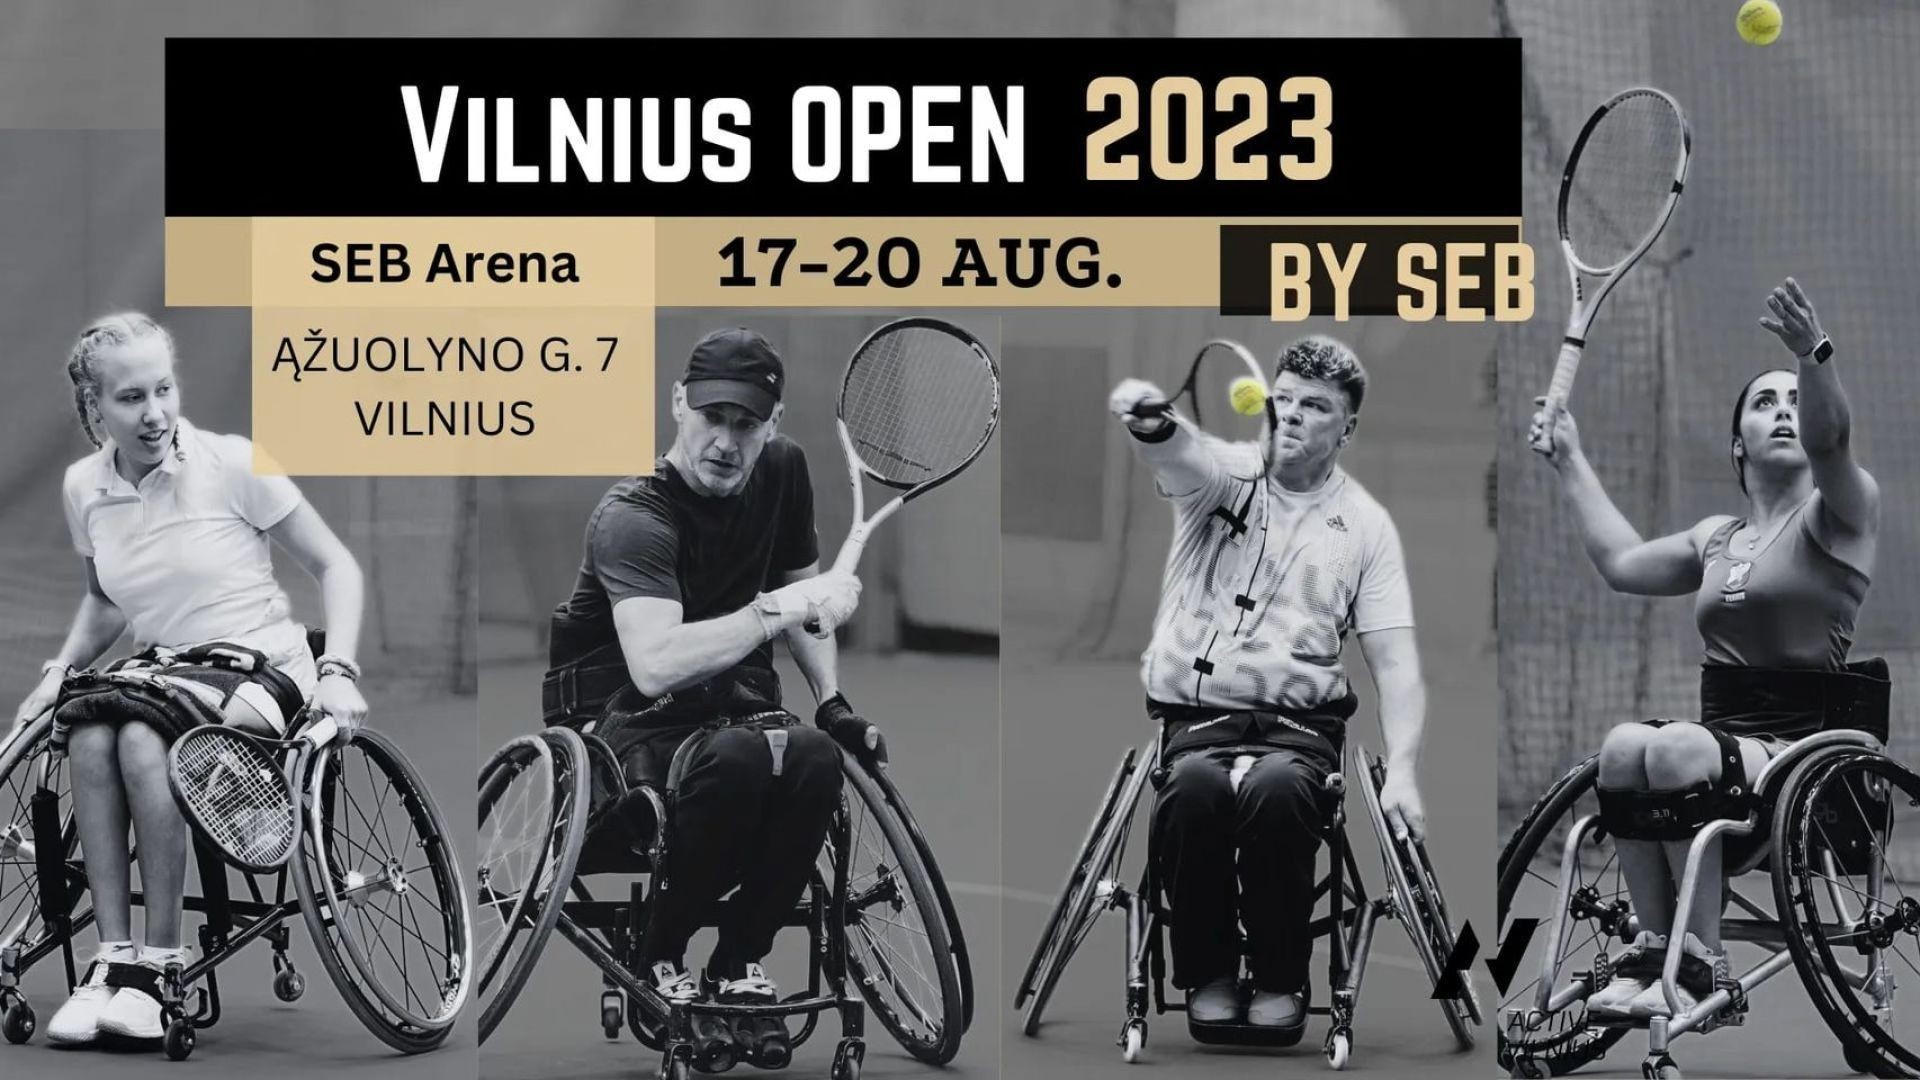 COURT 8 DAY 4 - VILNIIUS OPEN 2023 BY SEB